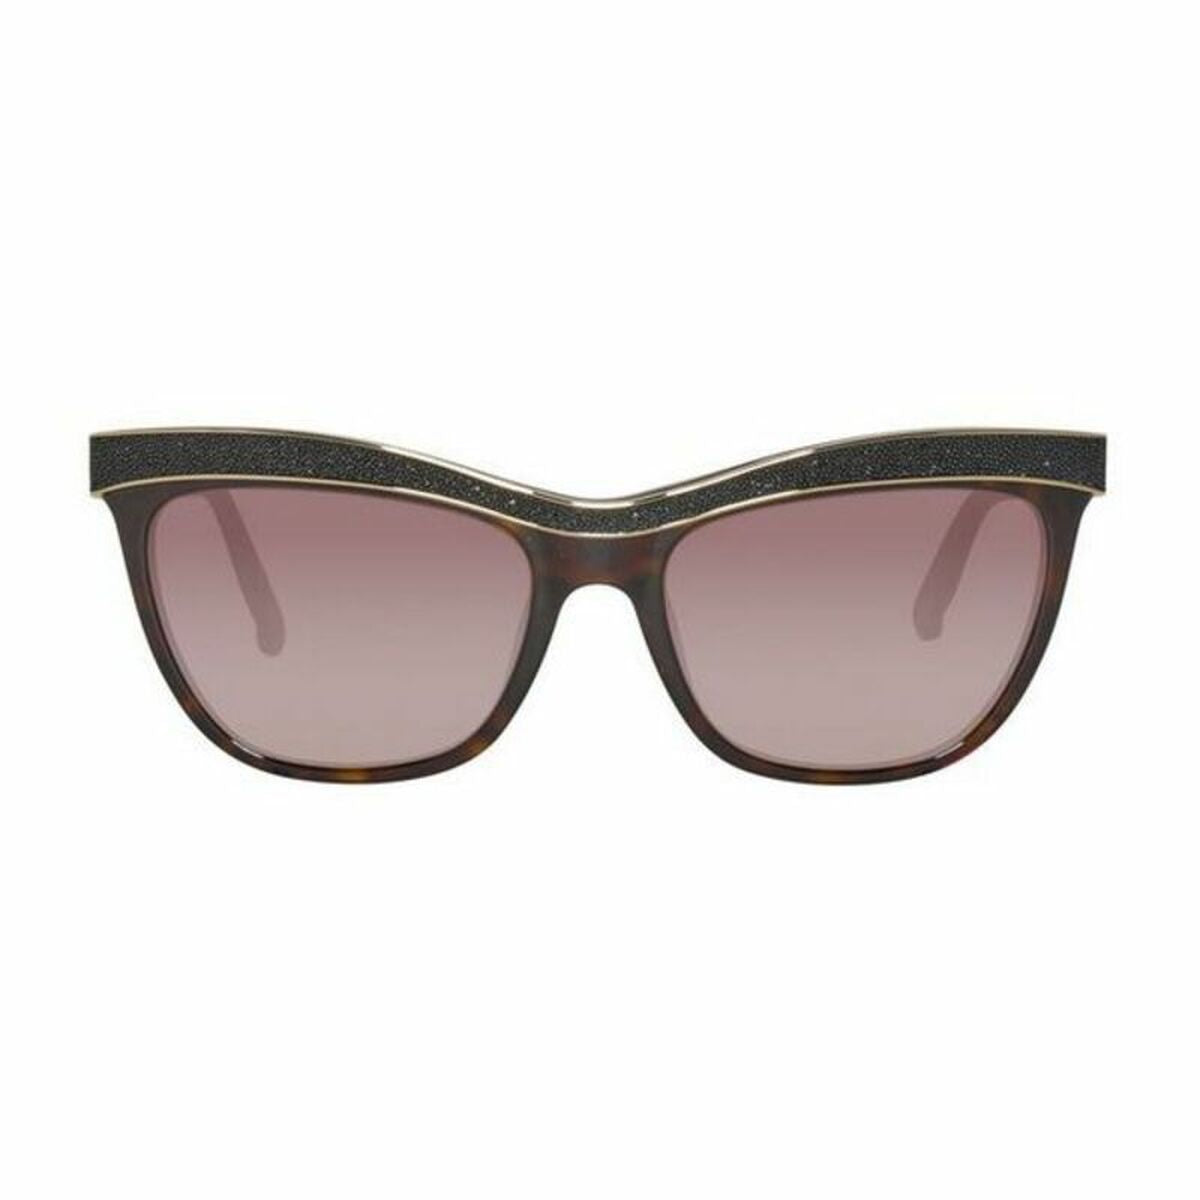 Ladies' Sunglasses Swarovski SK0075